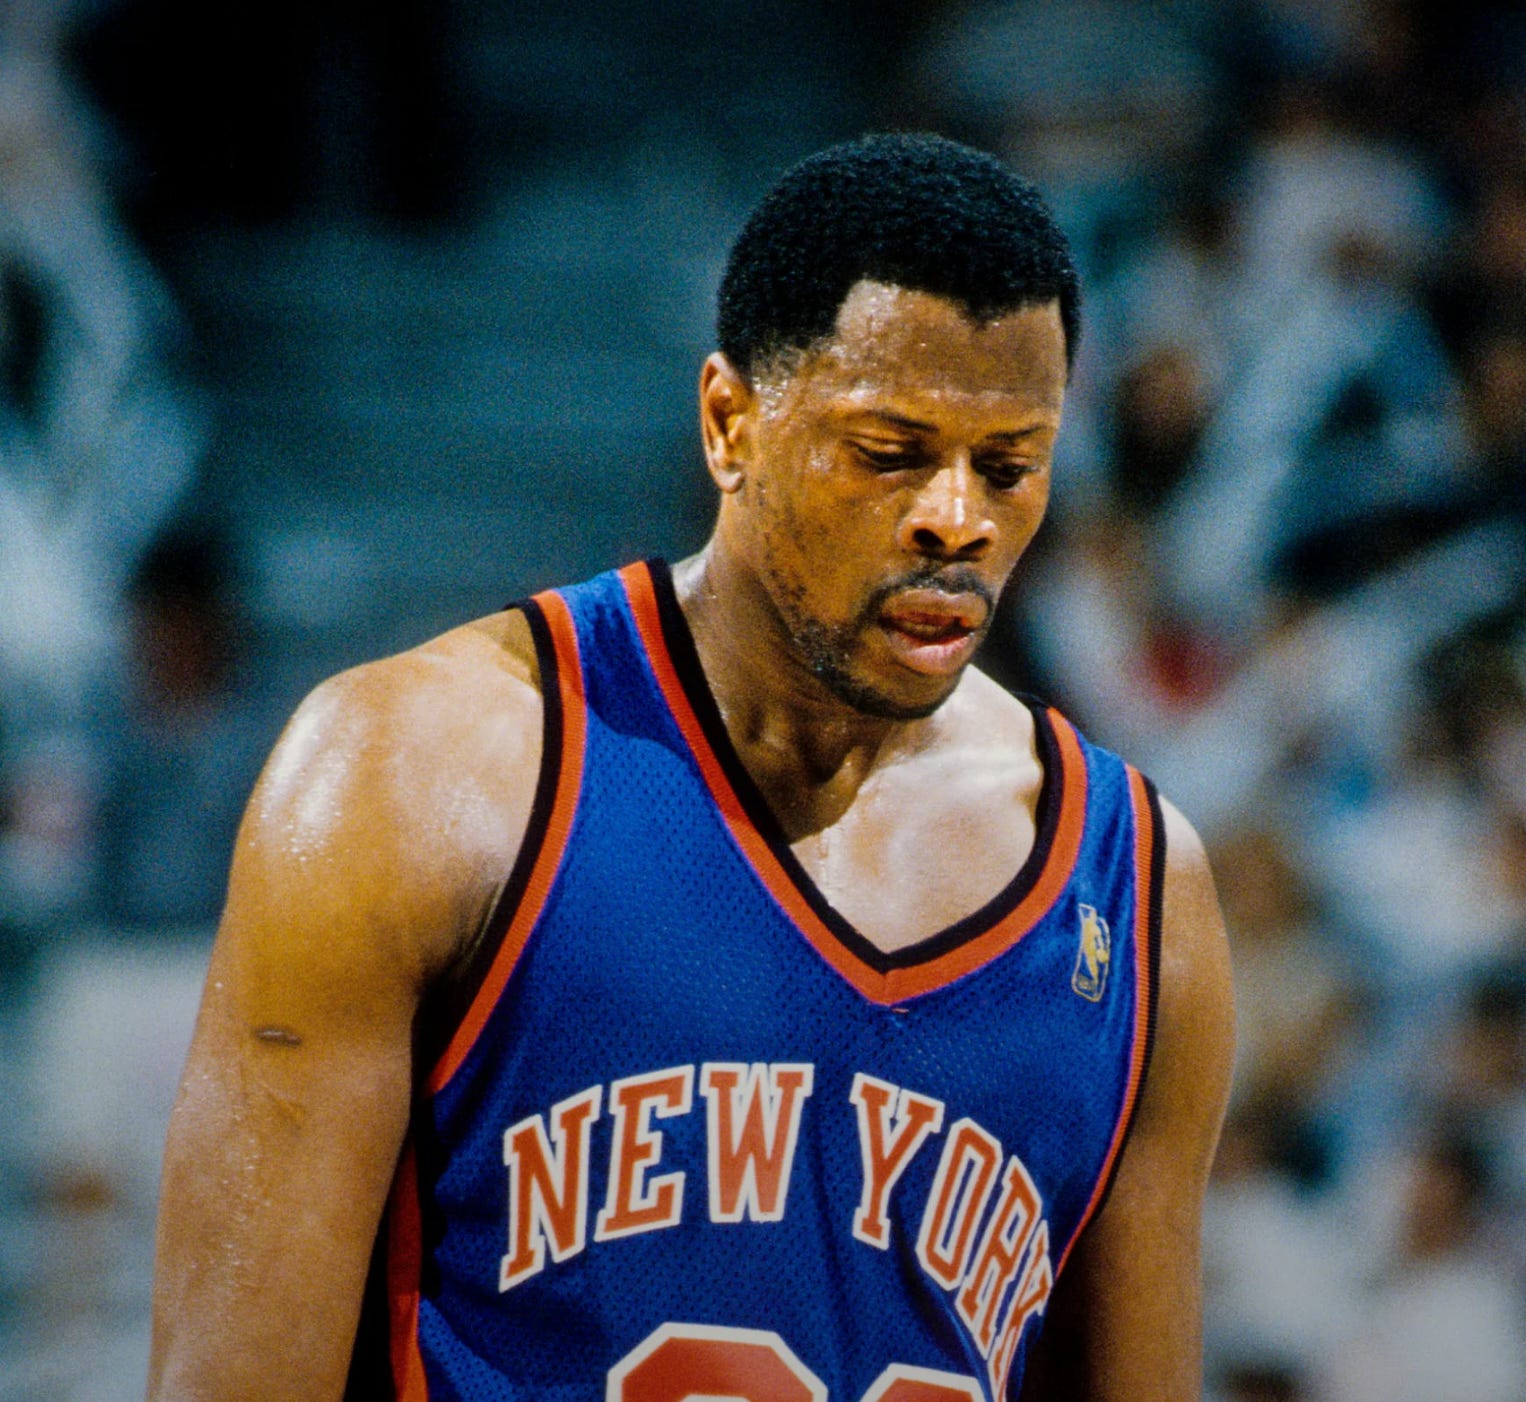 New York Knicks: Appreciating John Starks' 1994 NBA Finals performance